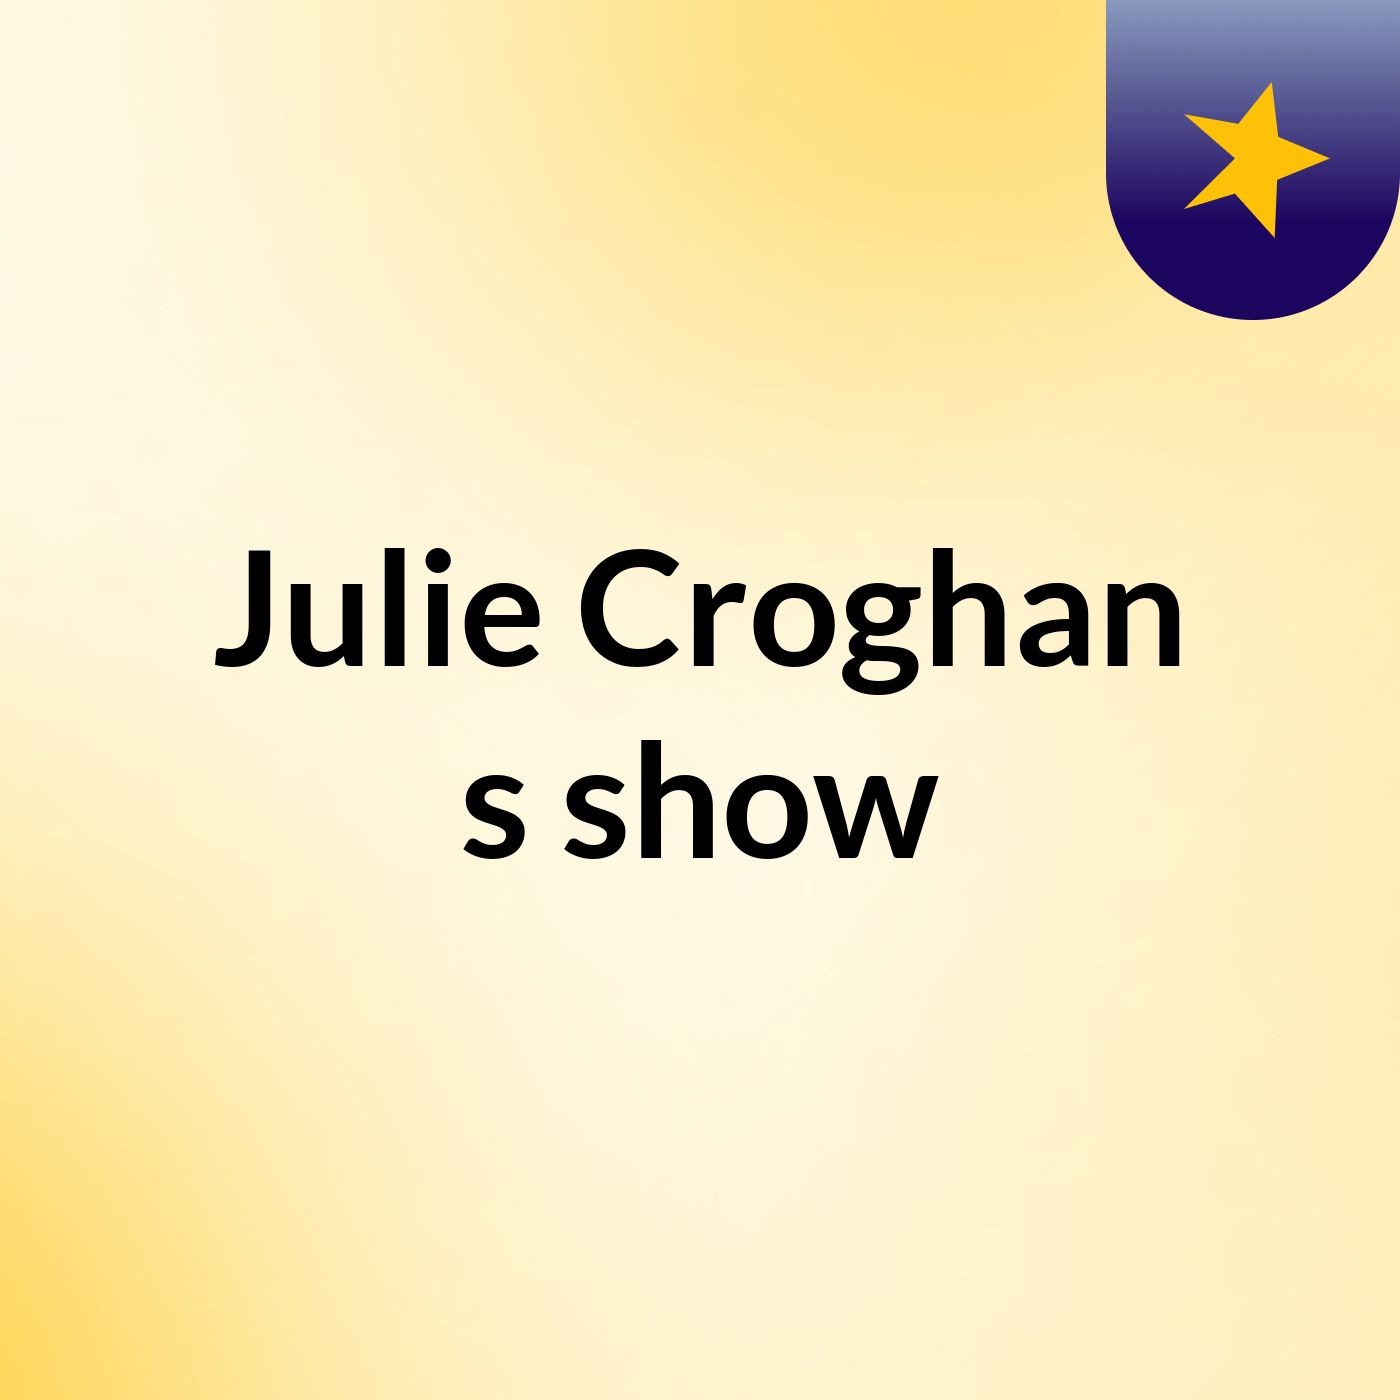 Julie Croghan's show